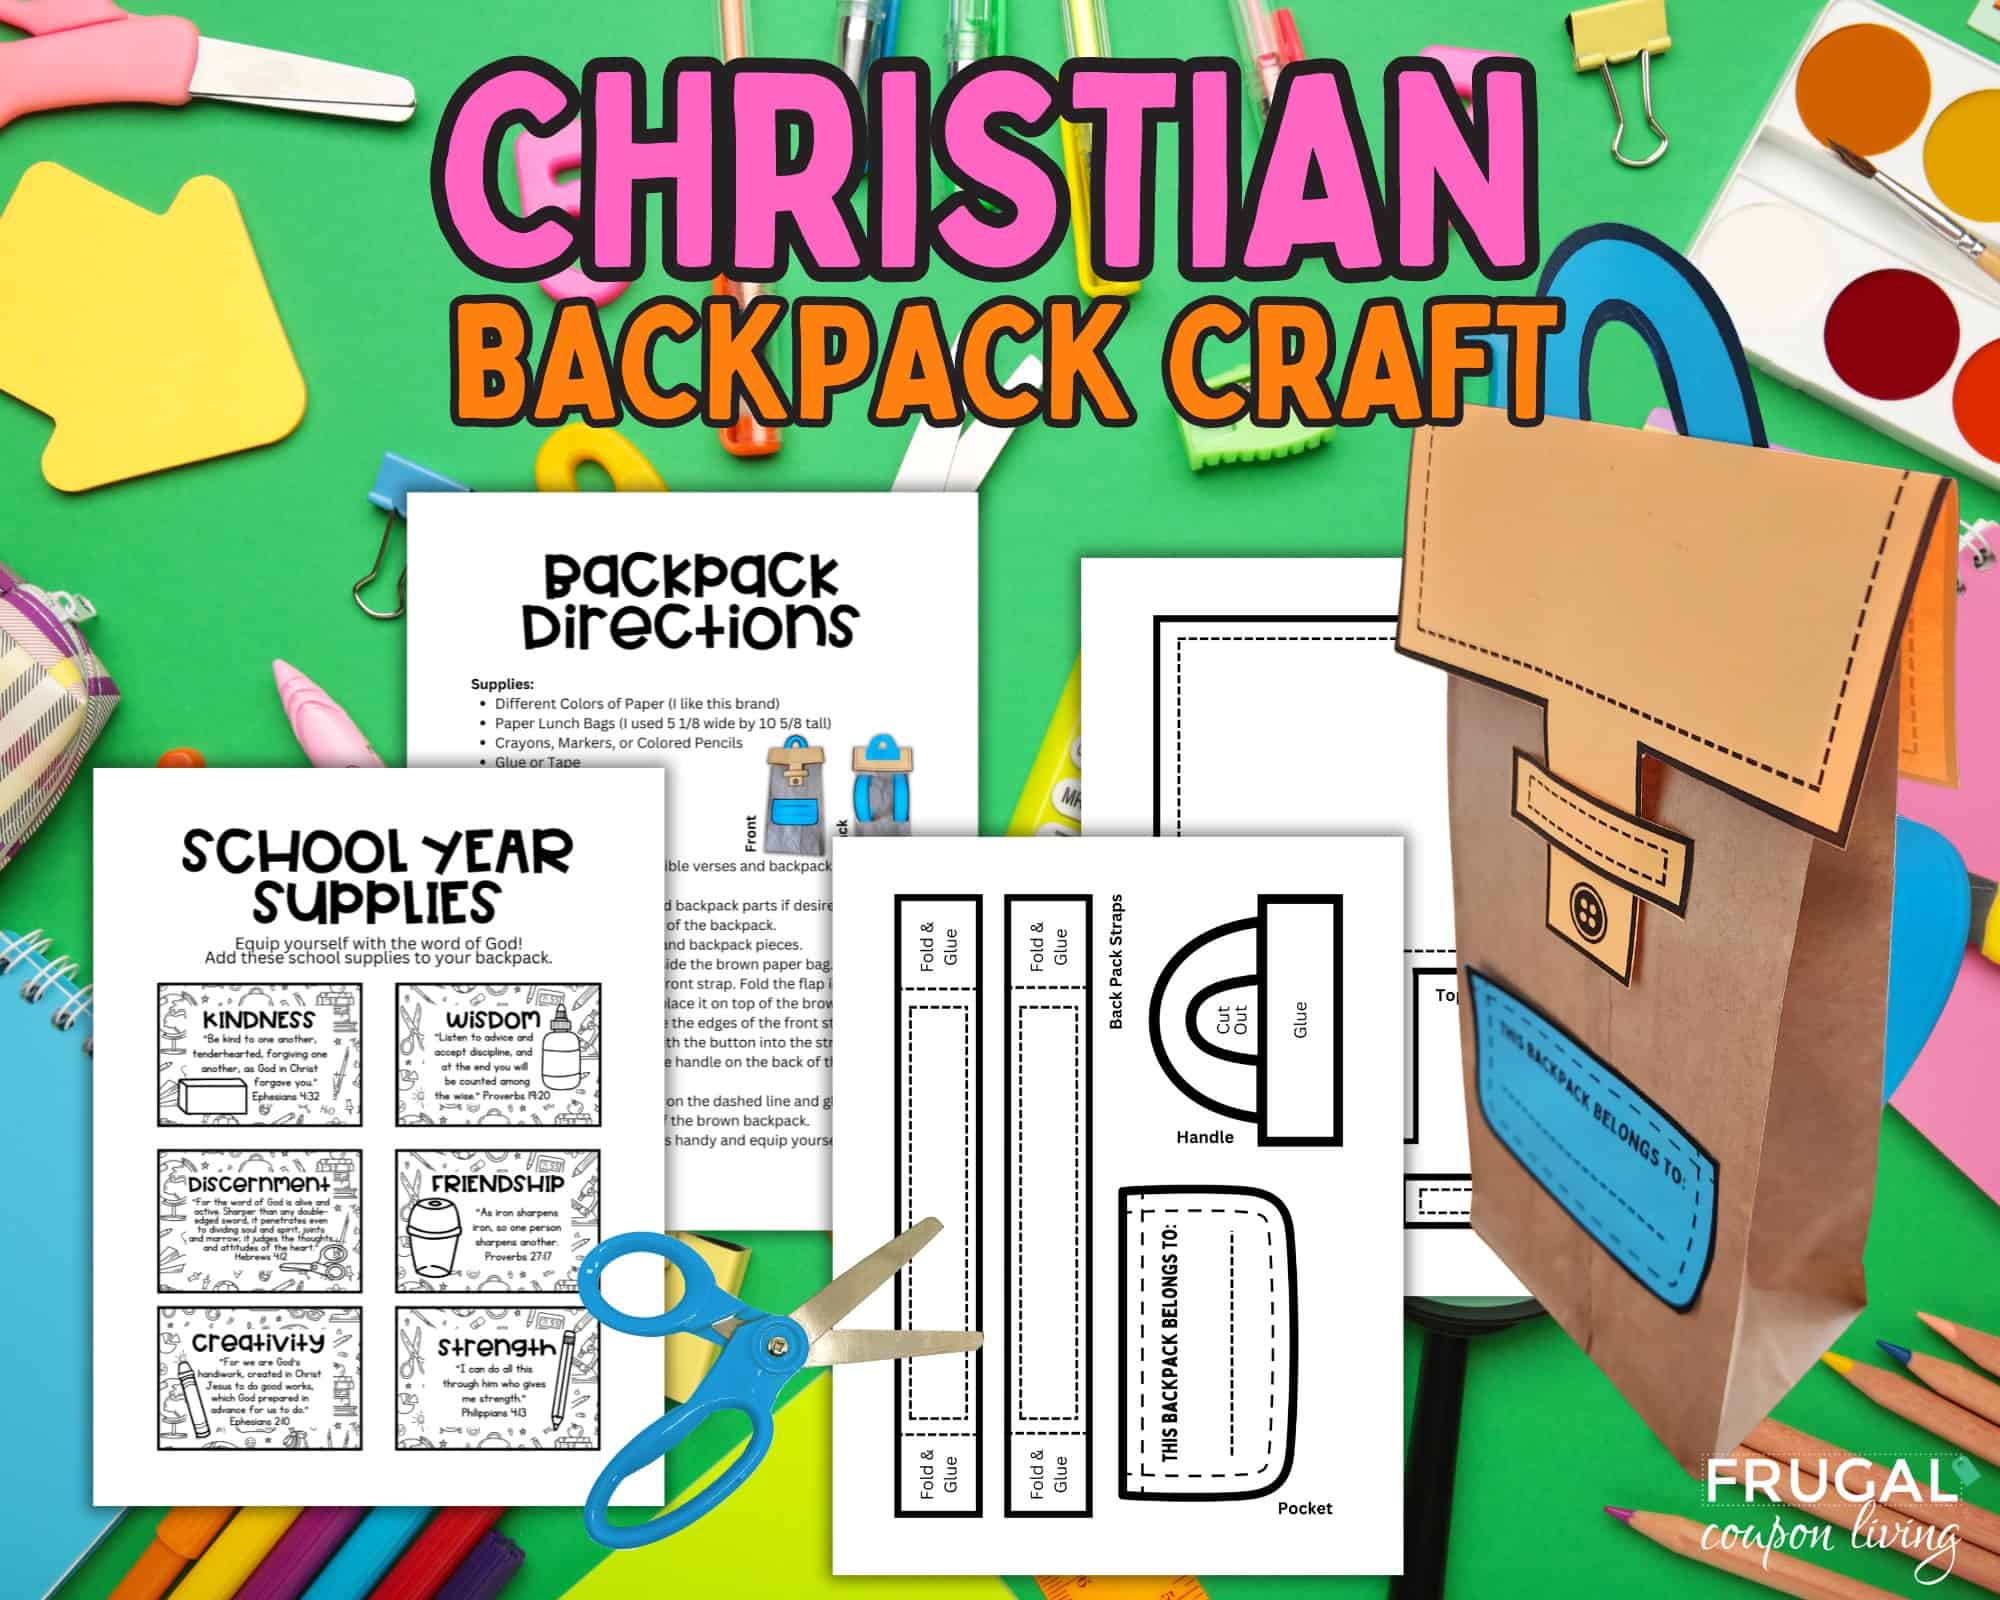 Christian craft brown paper bag backpack for kids